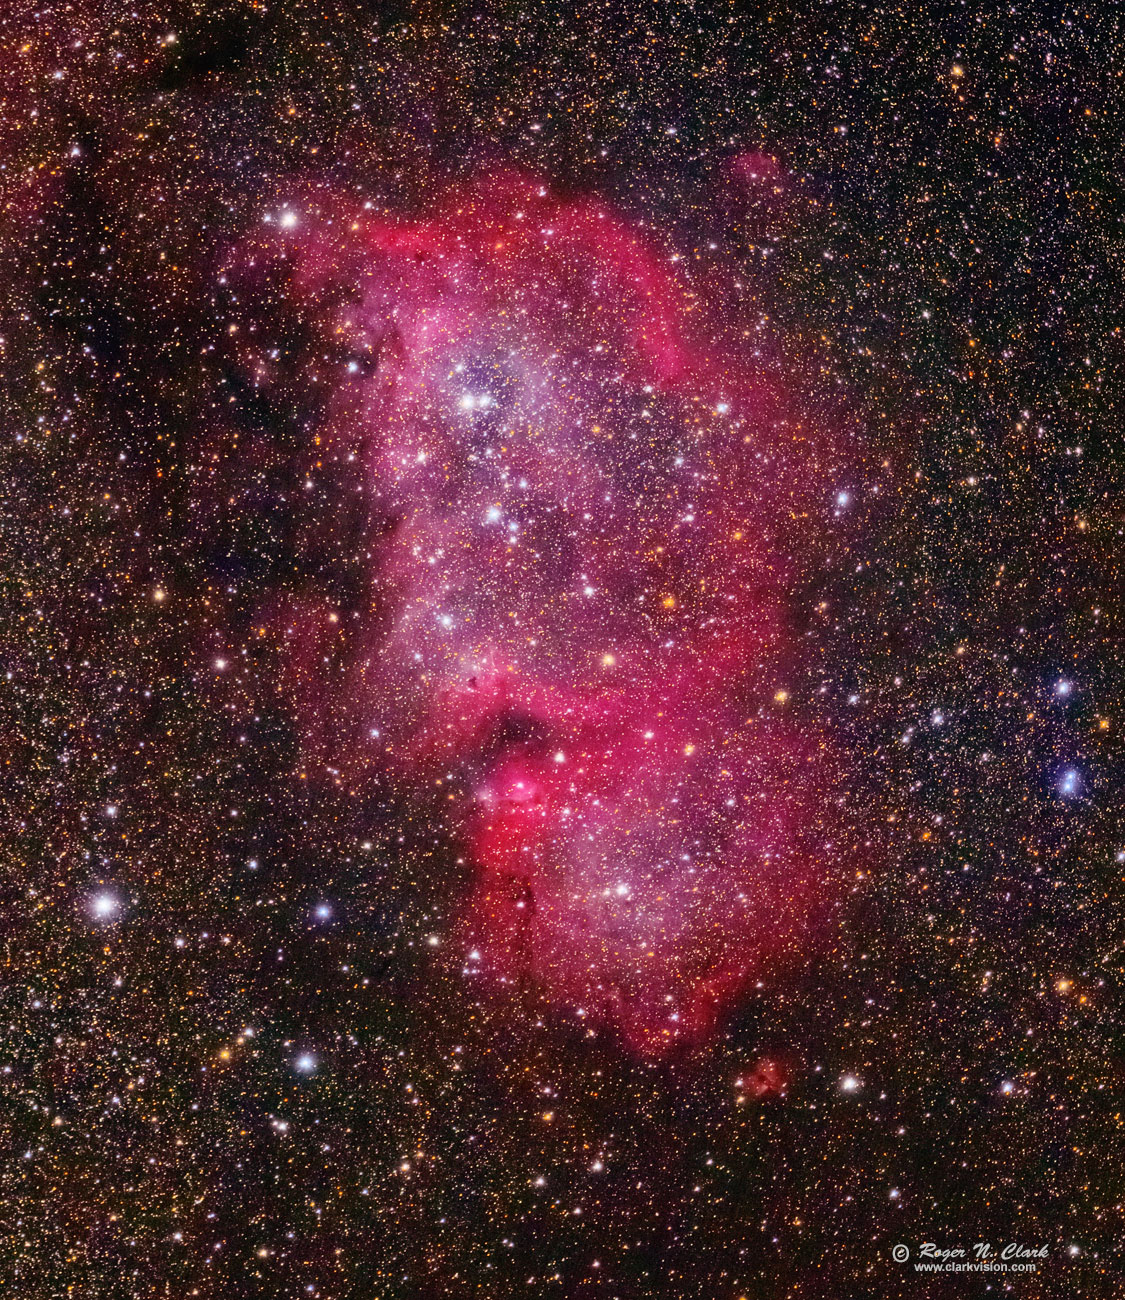 image ic1848-soul-nebula.c08.13.2015.0J6A5447-91av35-t2-rs90,3.g-1300vs.jpg is Copyrighted by Roger N. Clark, www.clarkvision.com